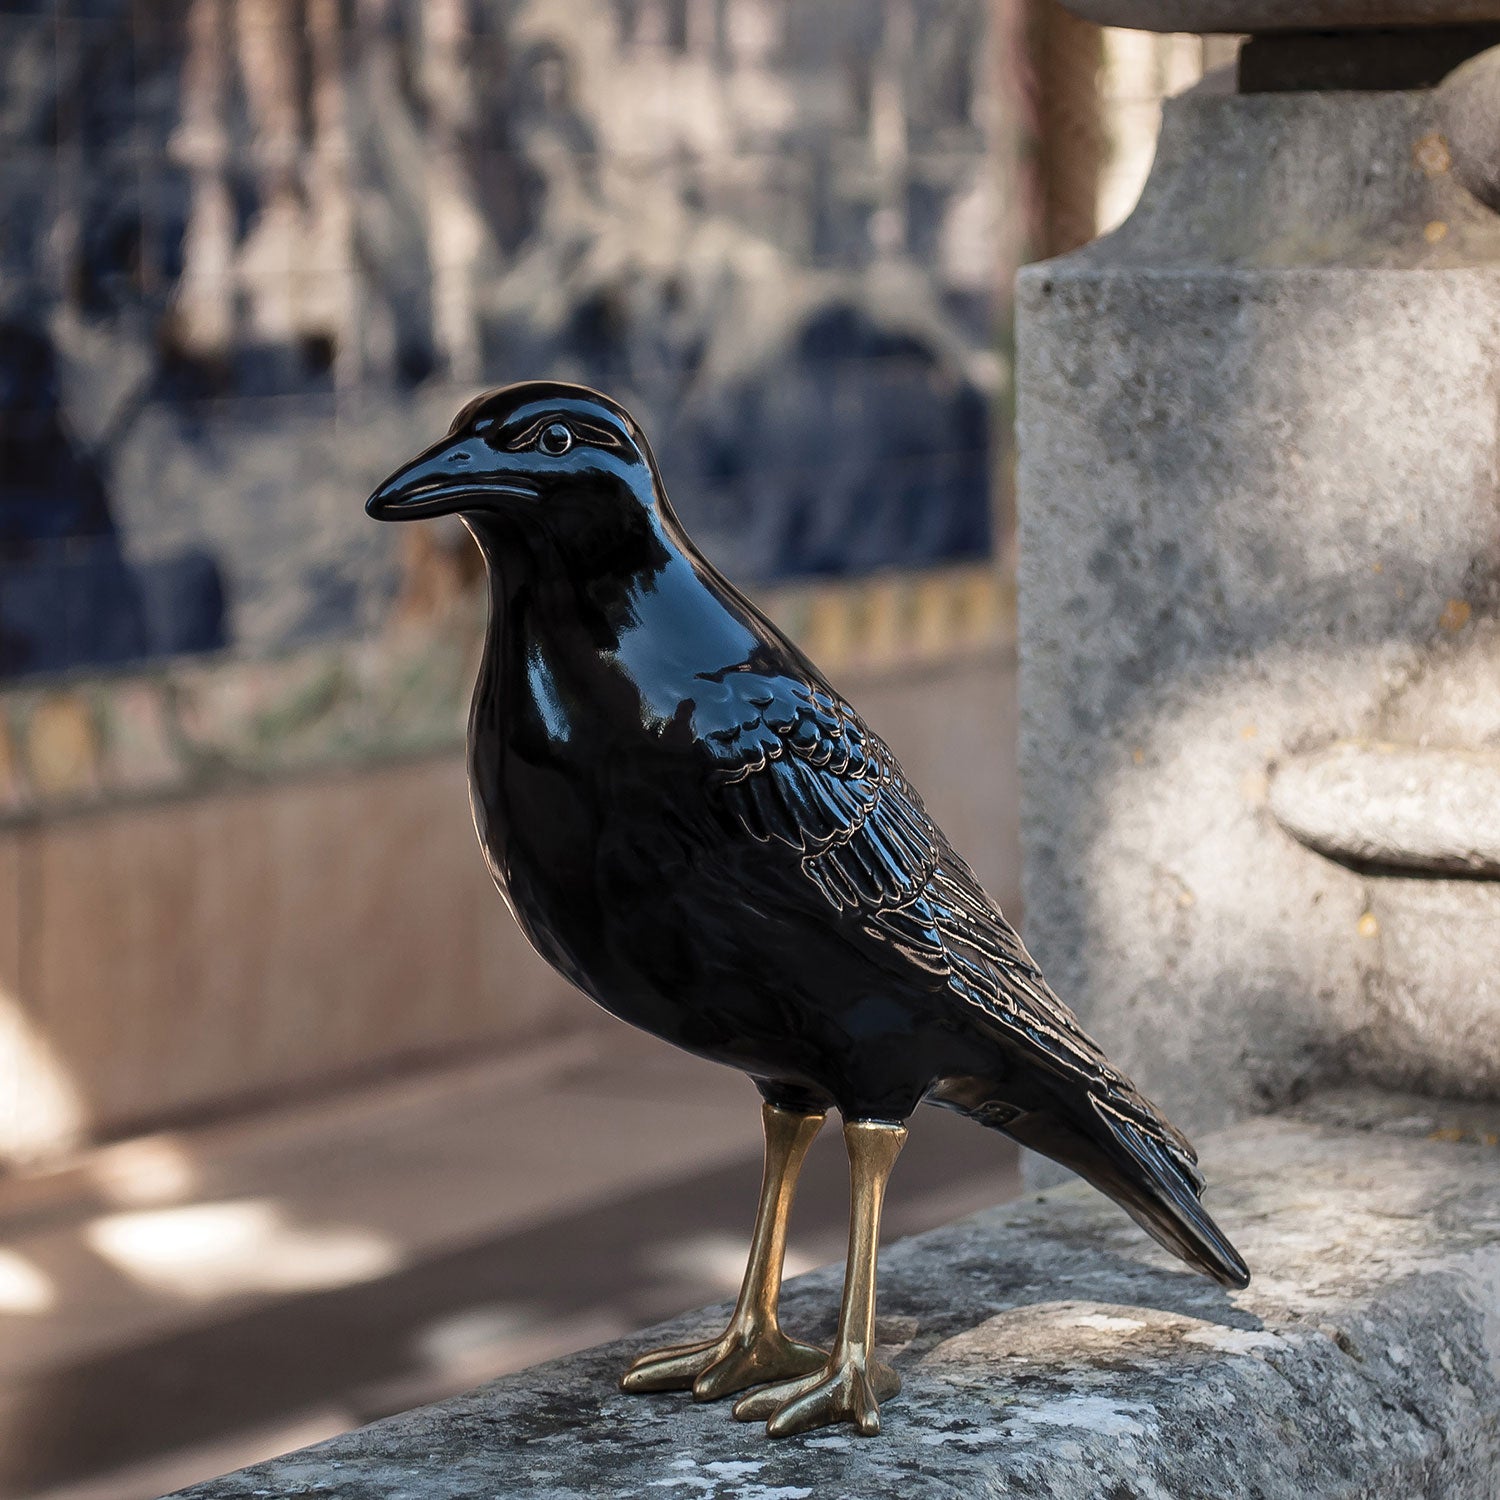 Hand Painted Ceramic Home Decor Crow Black Raven Figurine - The Naughty Crow